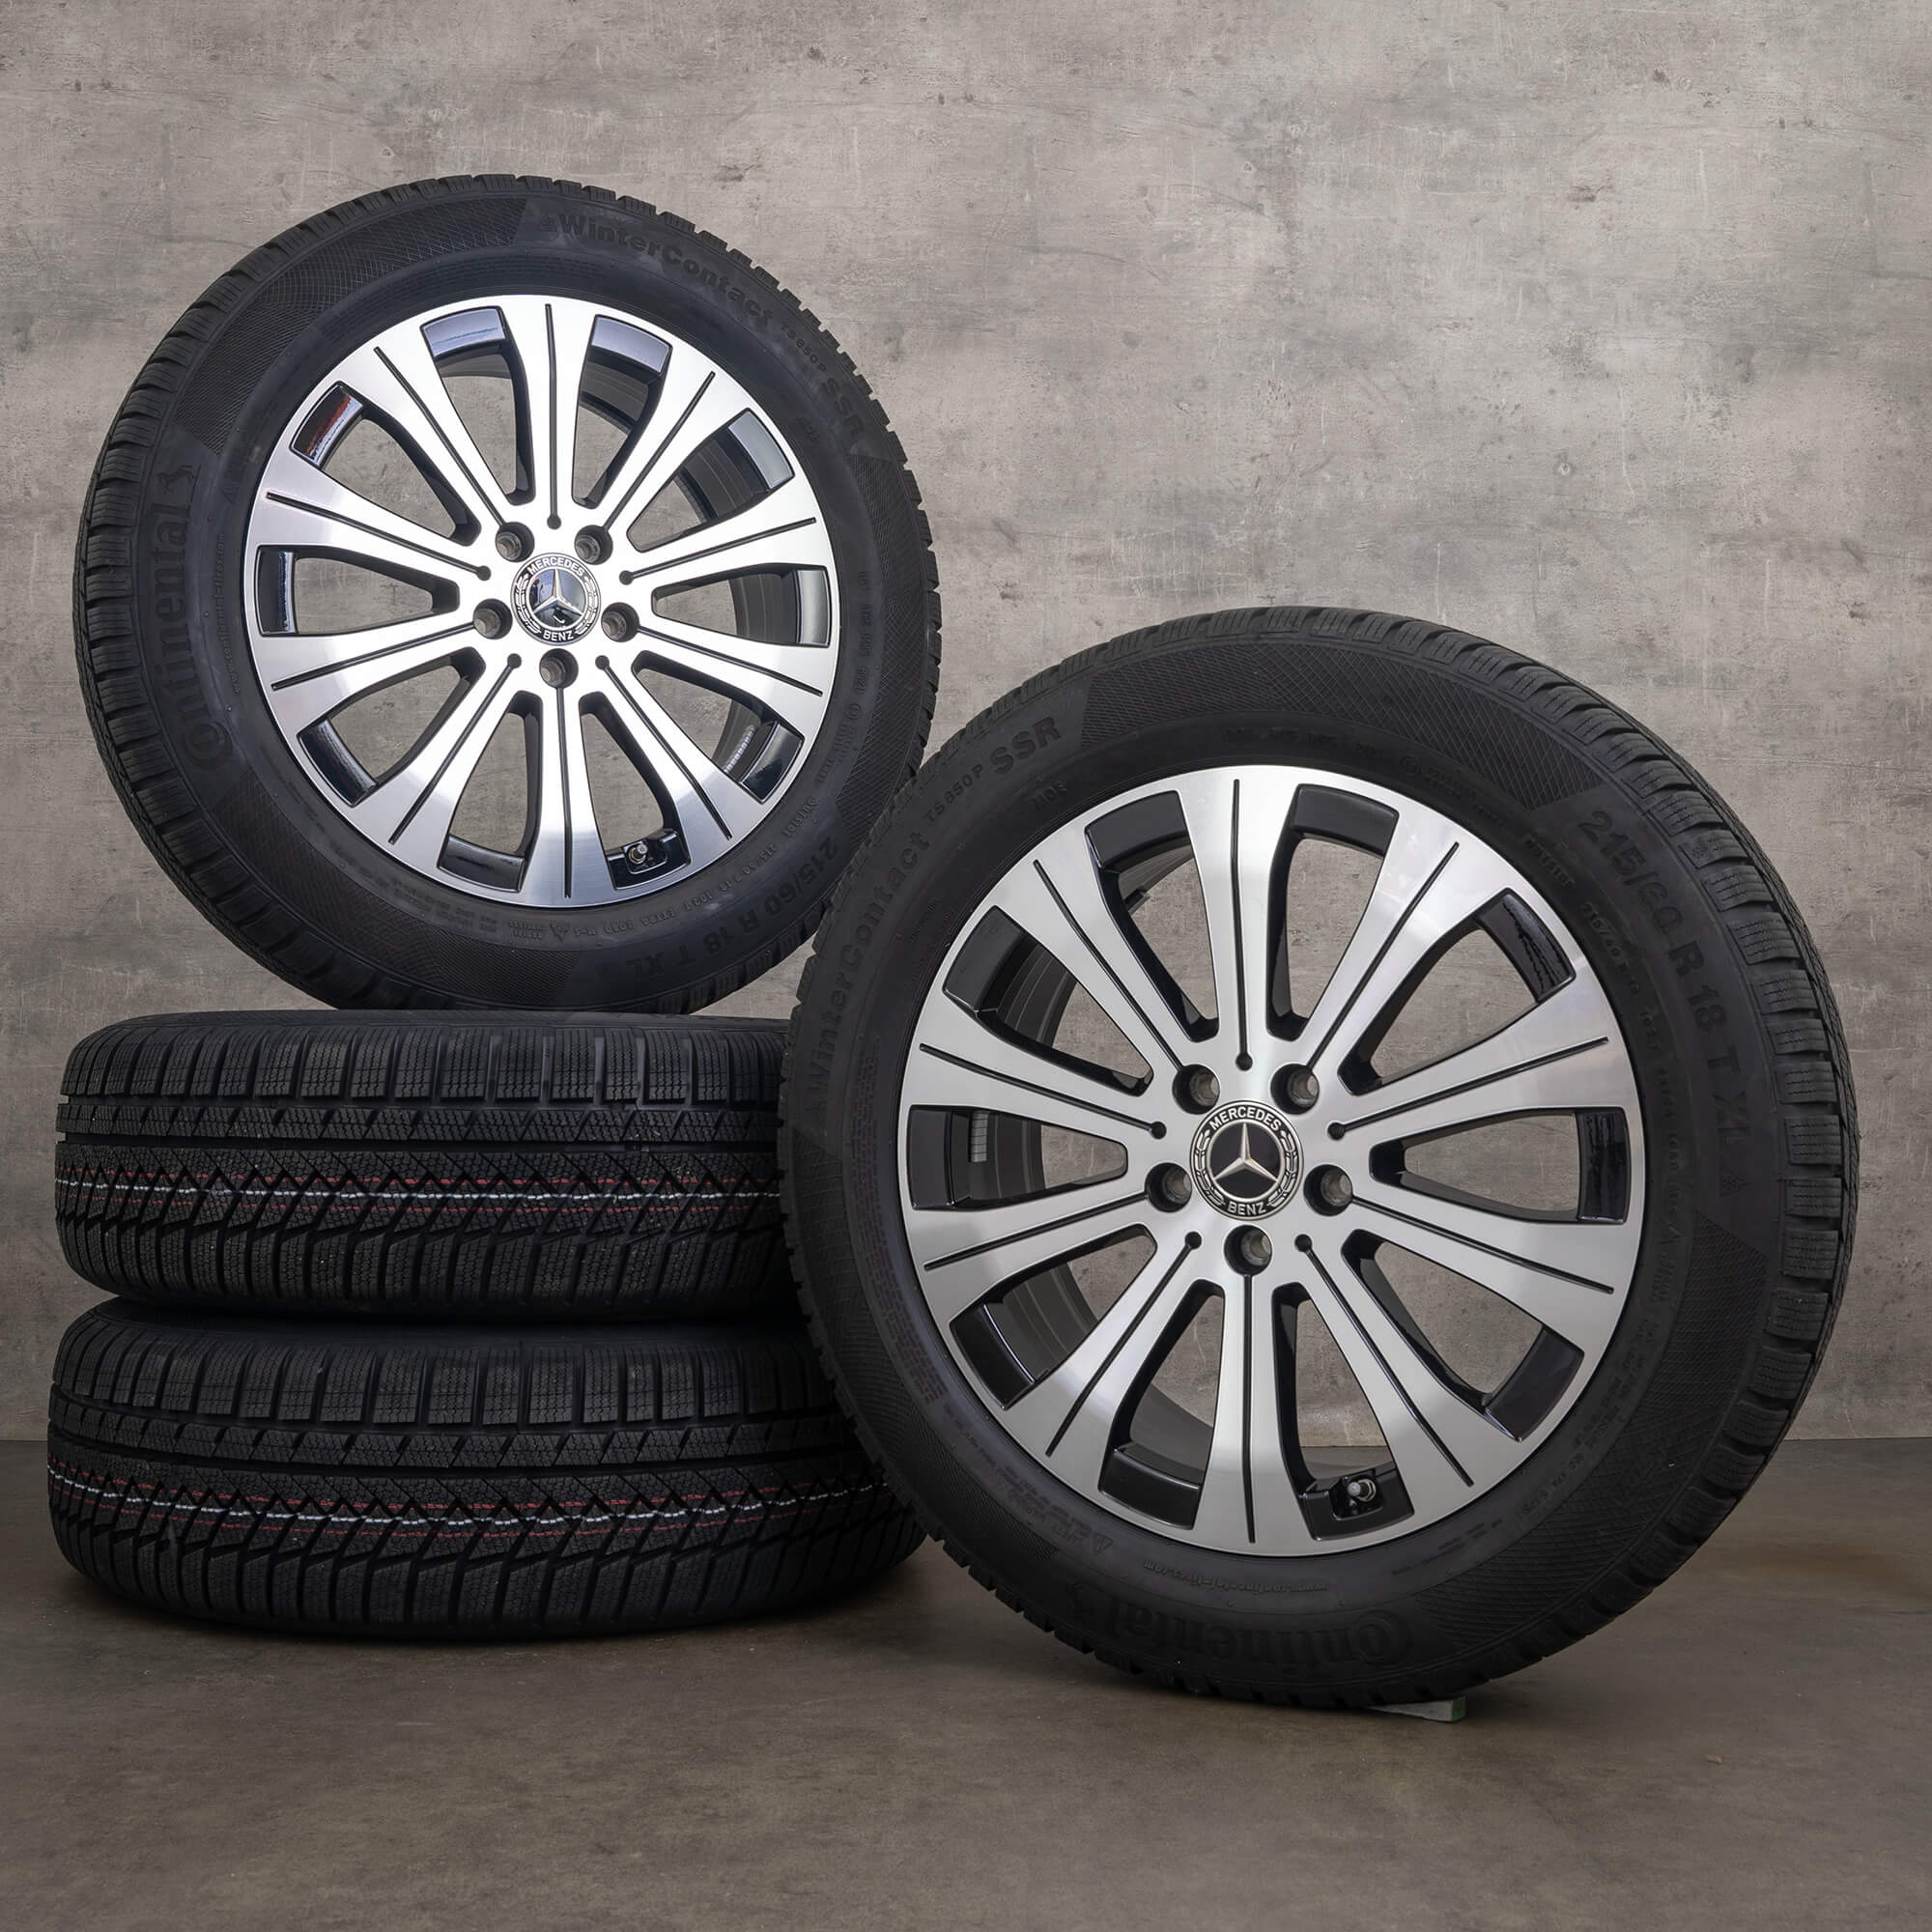 OEM Mercedes Benz EQA H243 EQB X243 winter wheels 18 inch rims tires A2434010000 black high-gloss